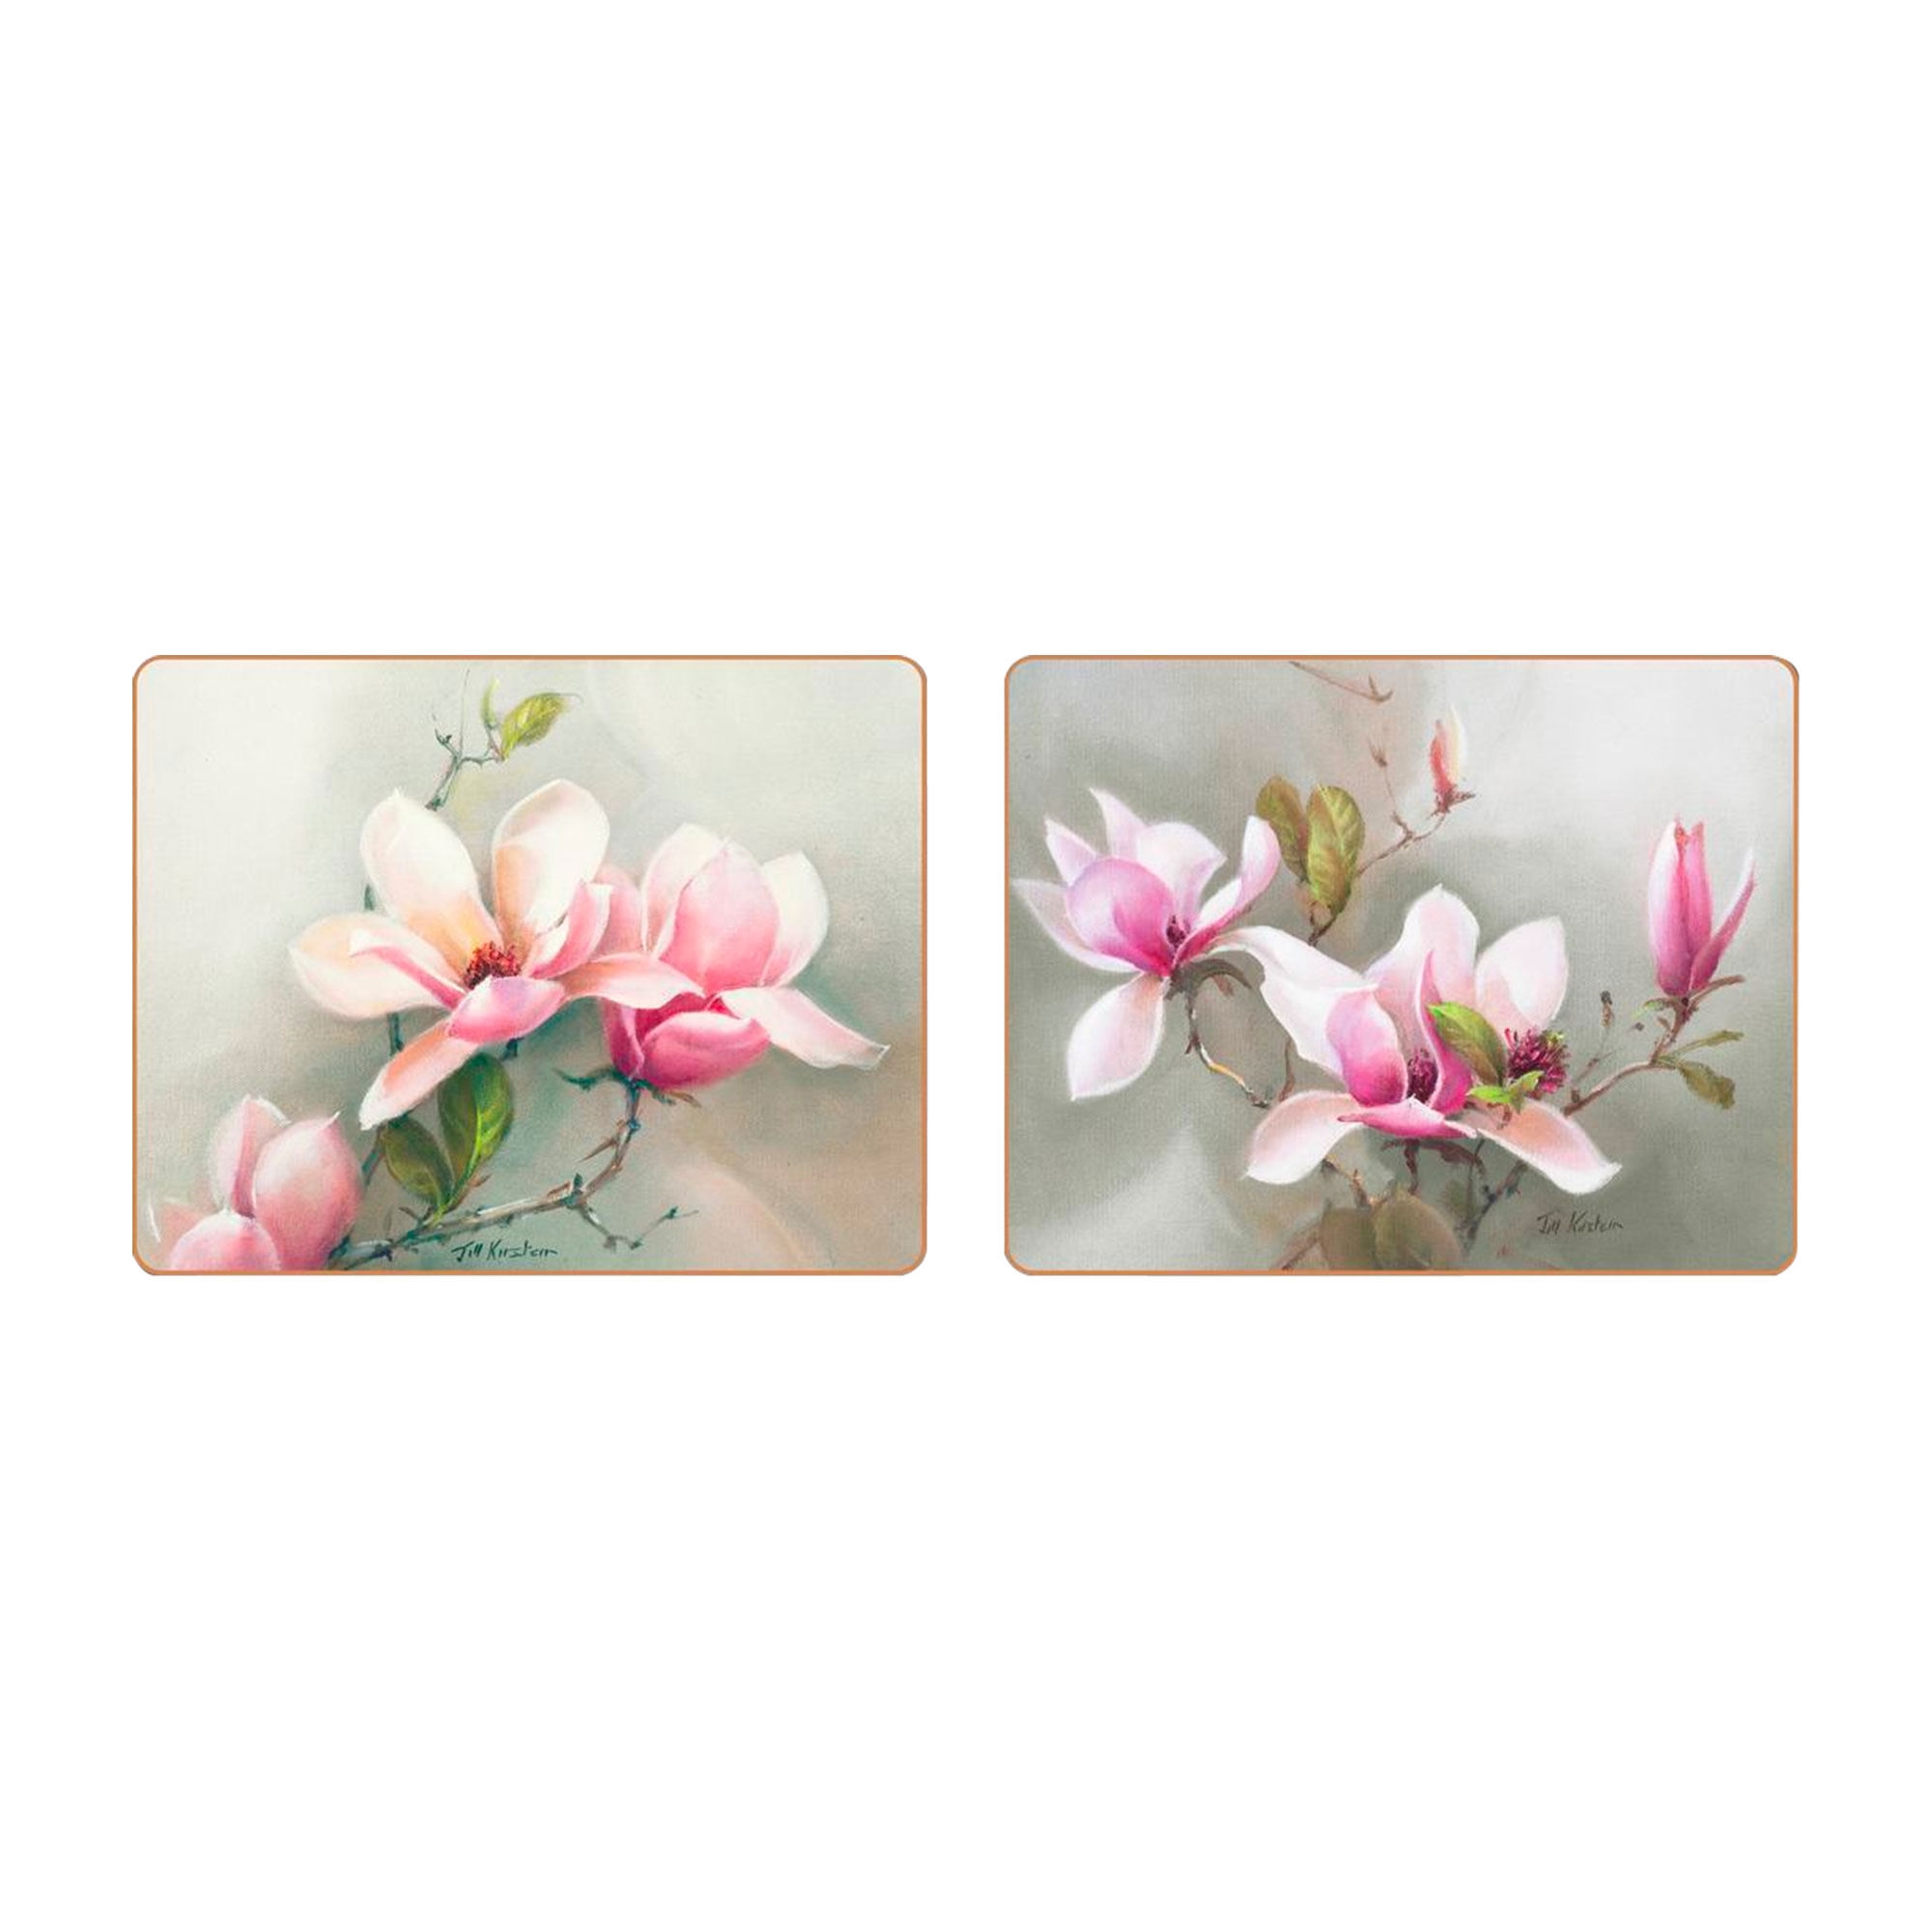 Cinnamon Rectangular Placemat Set of 6 Magnolias Image 2